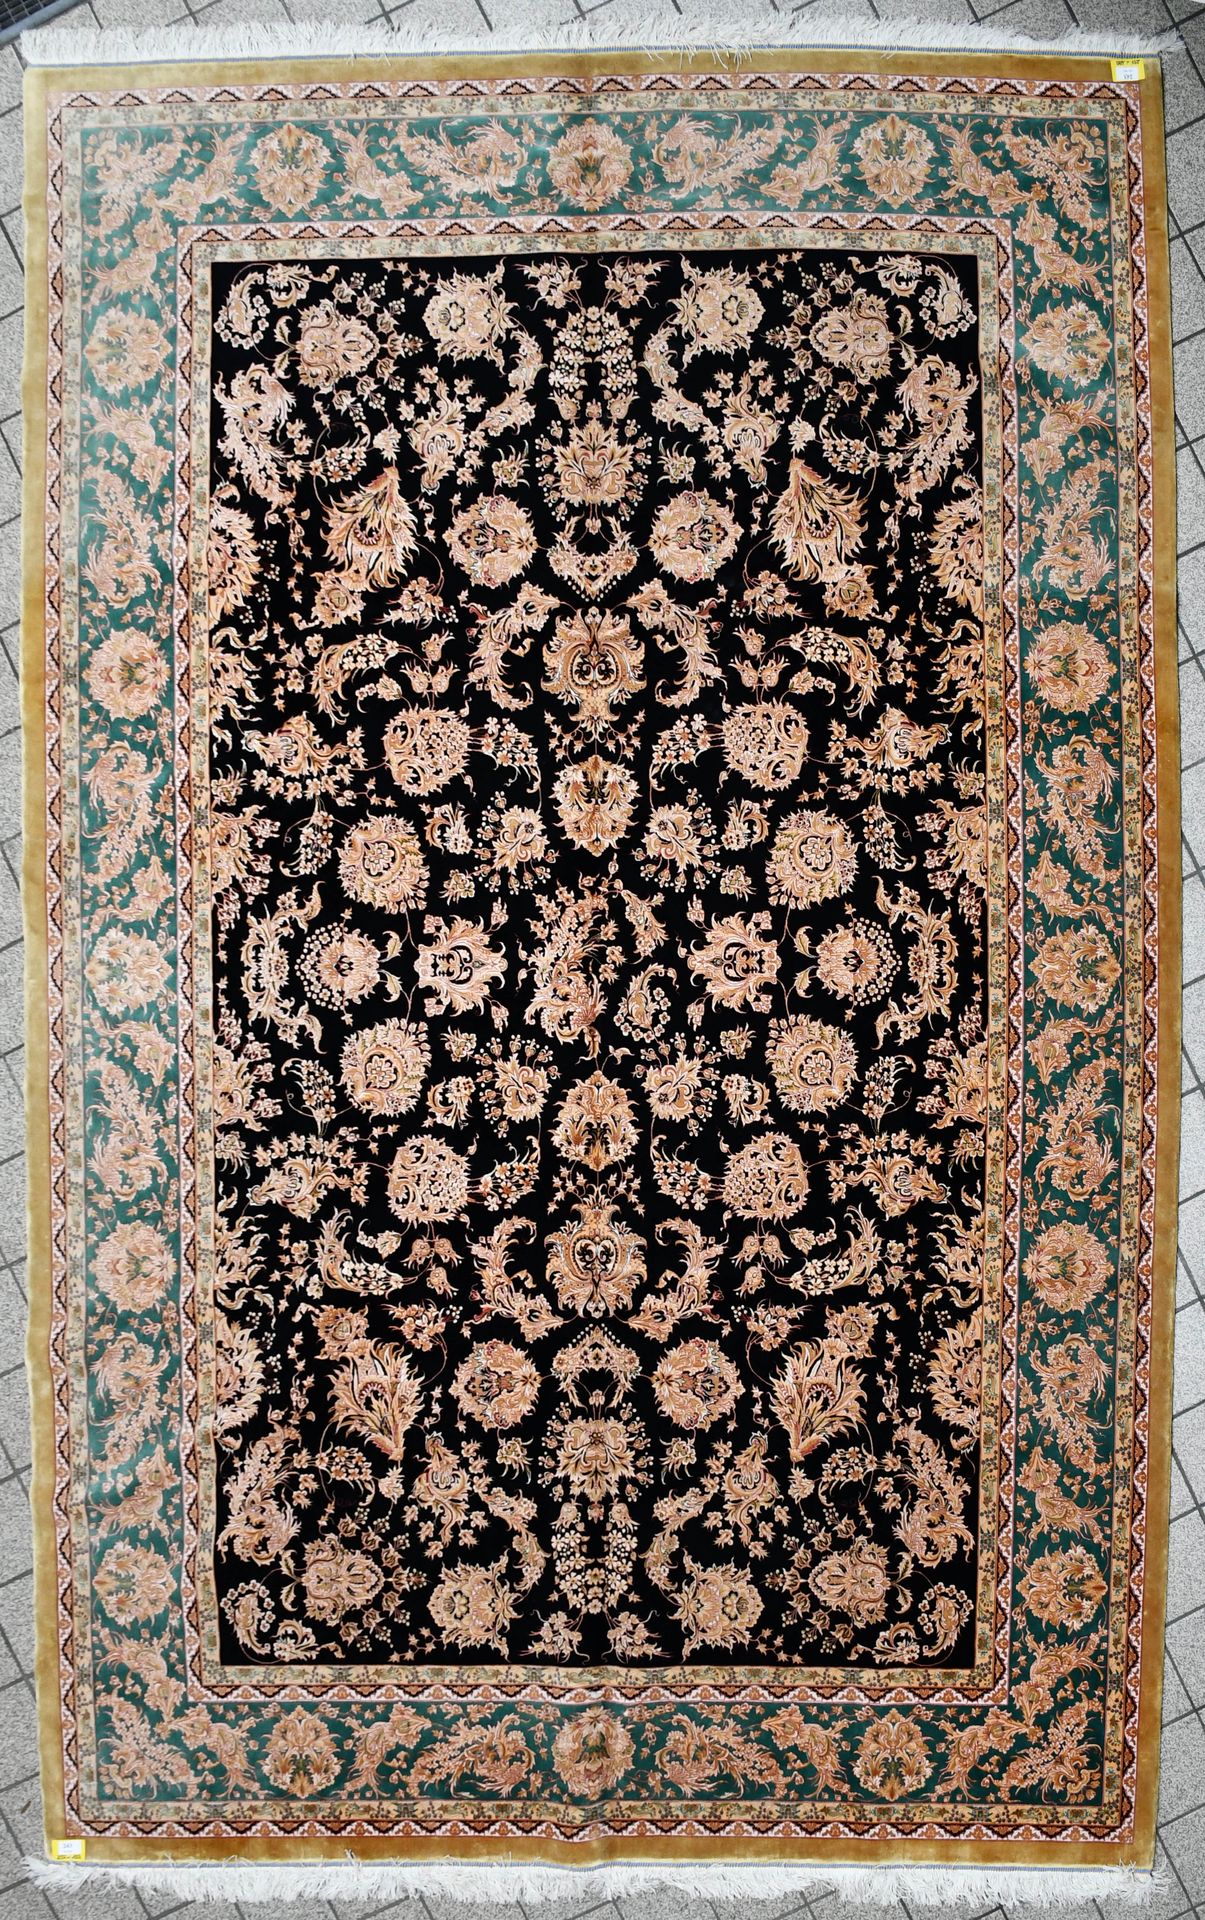 Null 地毯

东方古姆特级丝毯，半机械化。

尺寸：297厘米×199厘米。